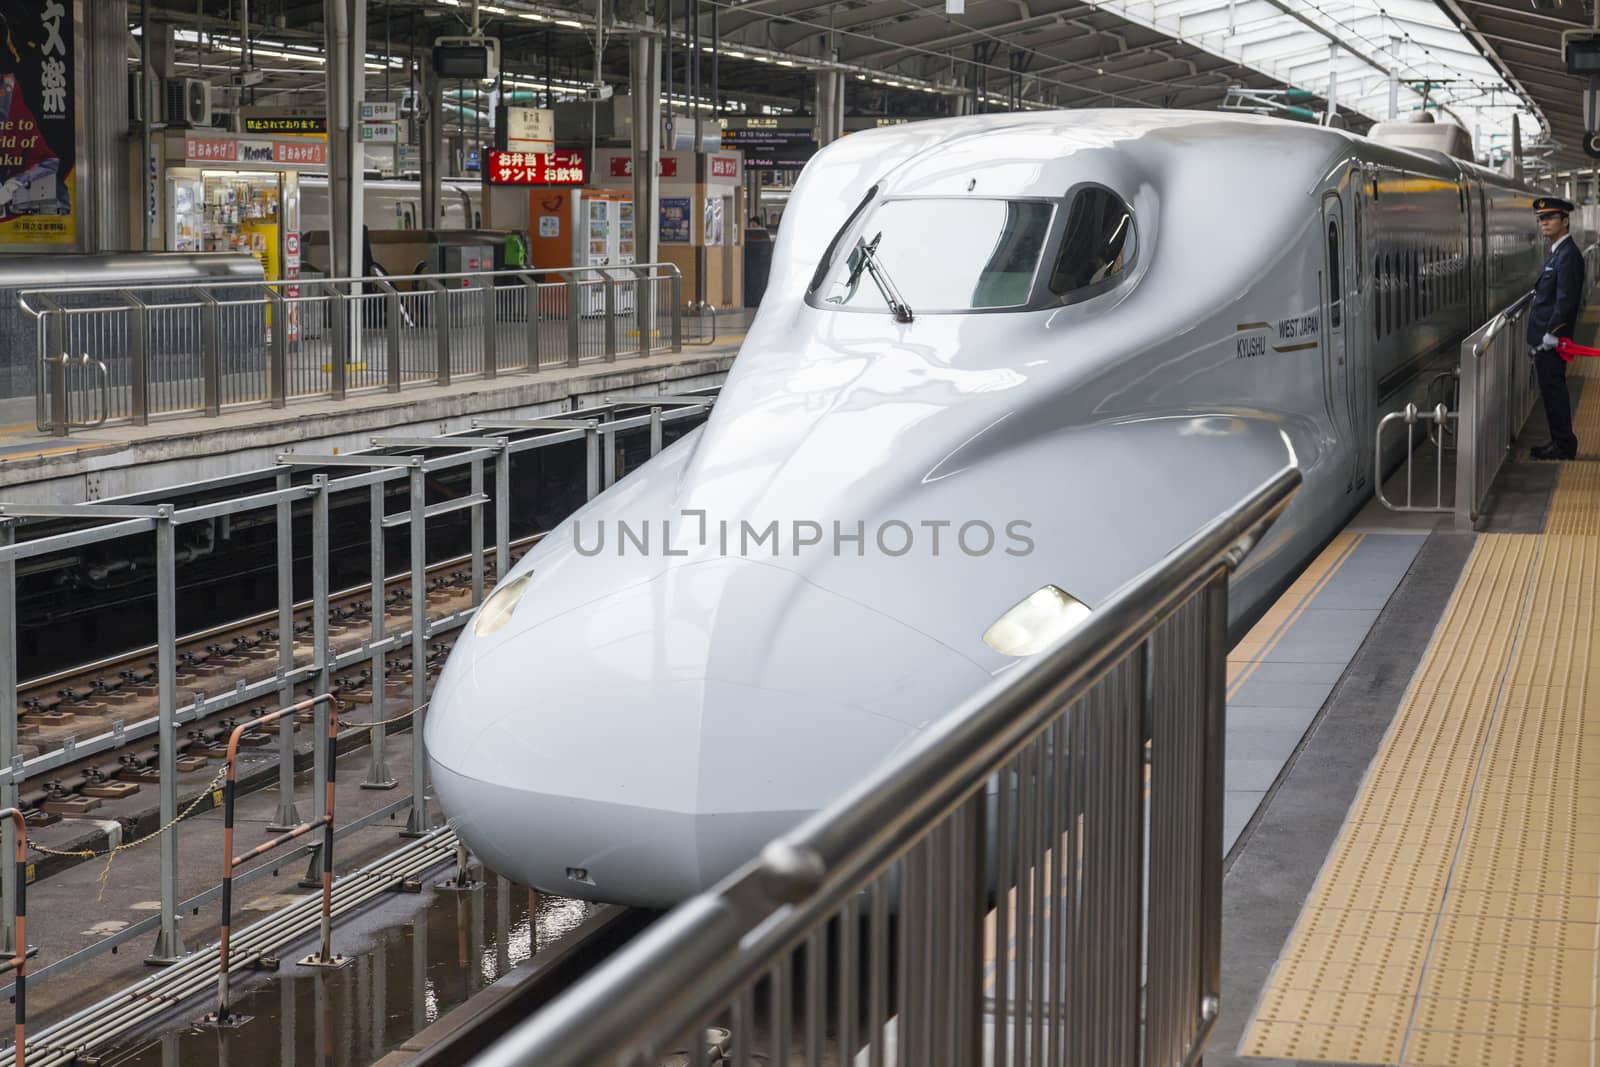 Osaka, Japan - Nov 1: A Shinkansen bullet train train arriving at the Shin Osaka Station in Osaka, Japan on Nov 1, 2014. The Shinkansen is a netwrok of high-speed railway lines in Japan.